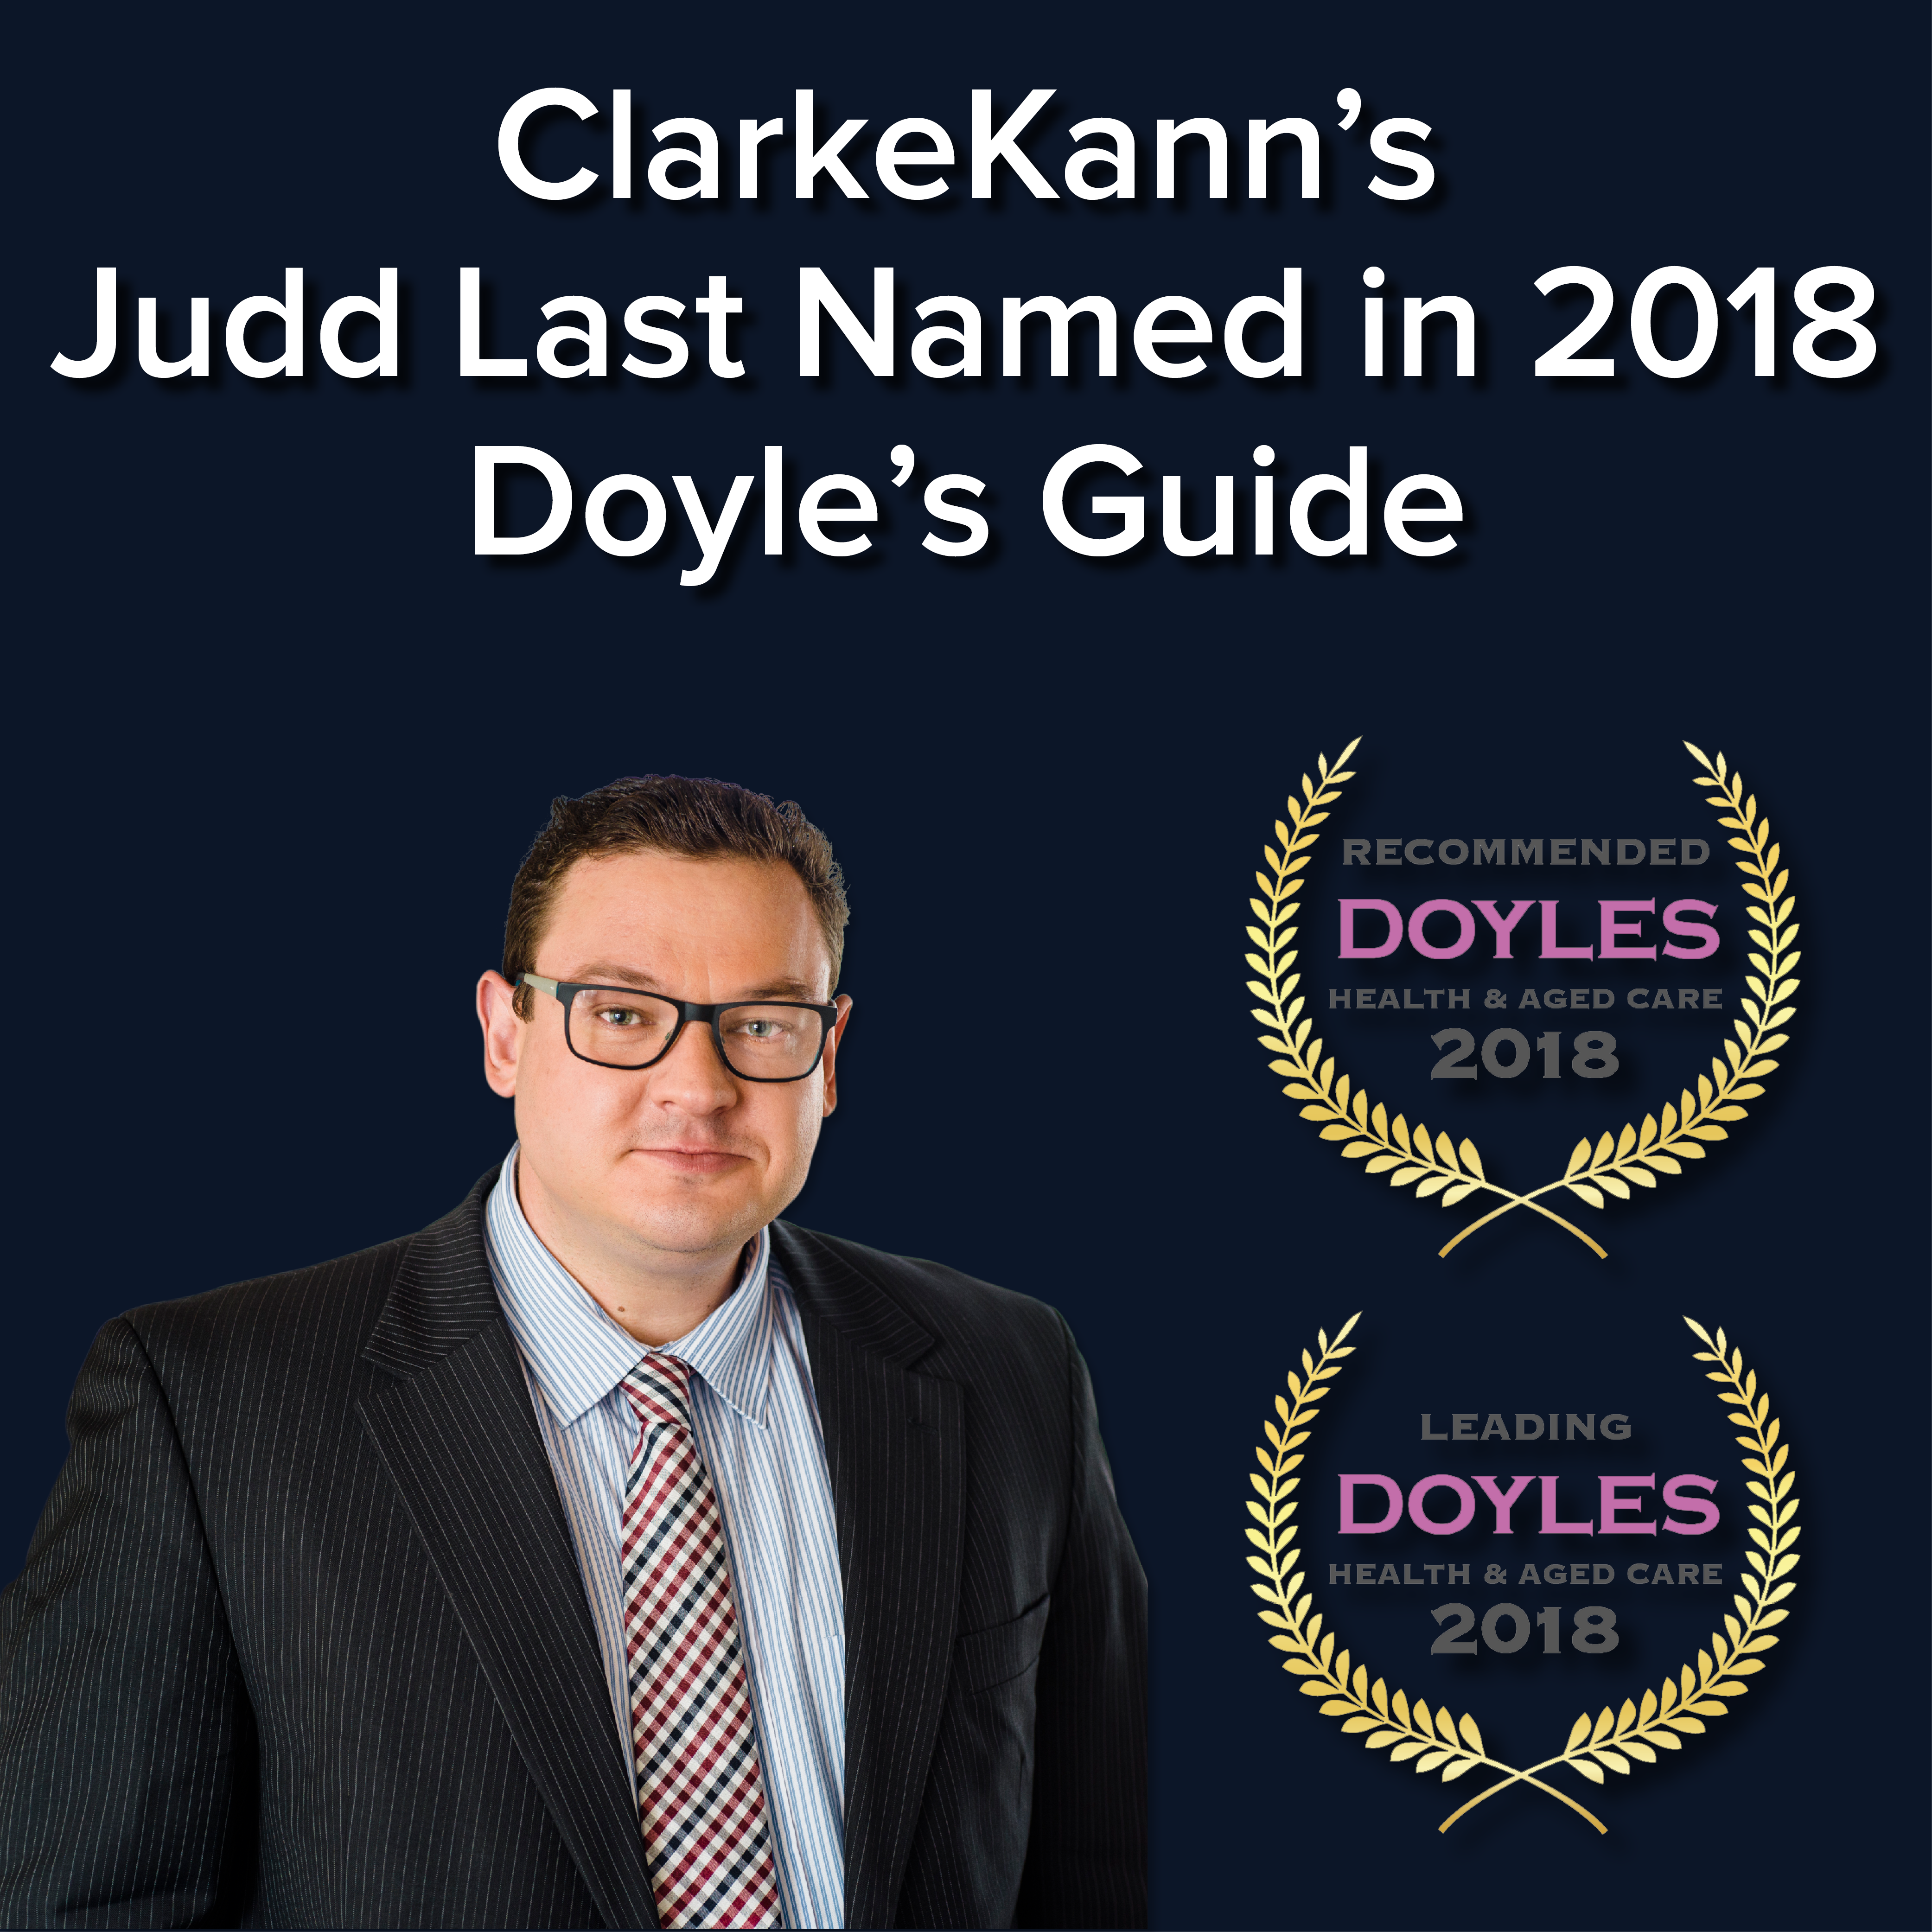 ANNOUNCEMENT: ClarkeKann’s Judd Last named in 2018 Doyle’s Guide